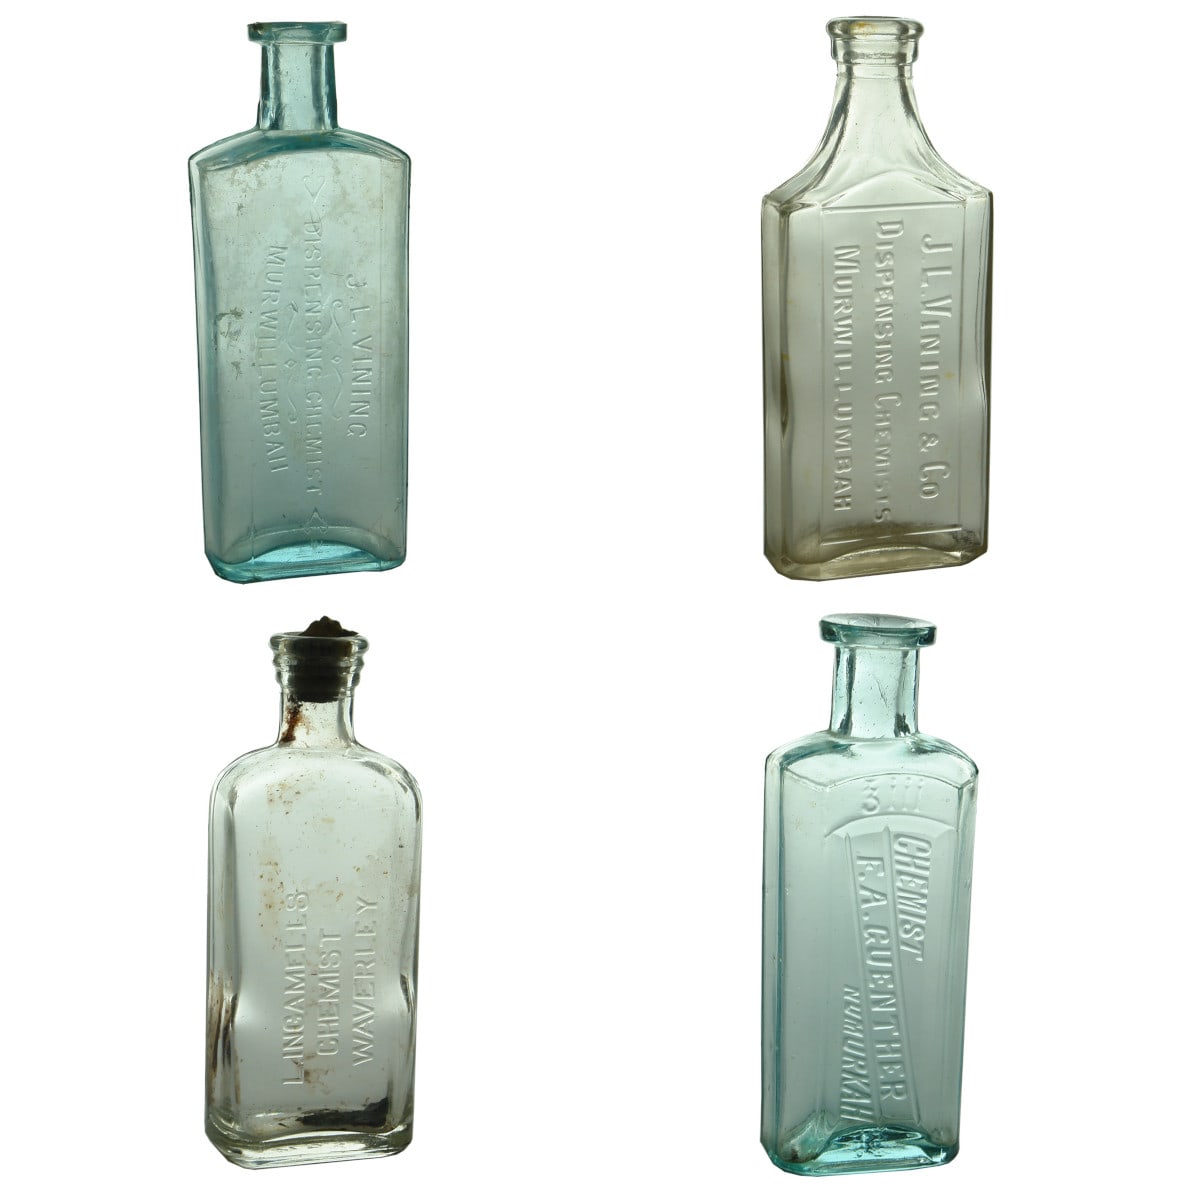 4 Chemist bottles: 2 x J. L. Vining Murwillumbah; Ingamells, Waverley; Guenther, Numurkah. (New South Wales & Victoria)